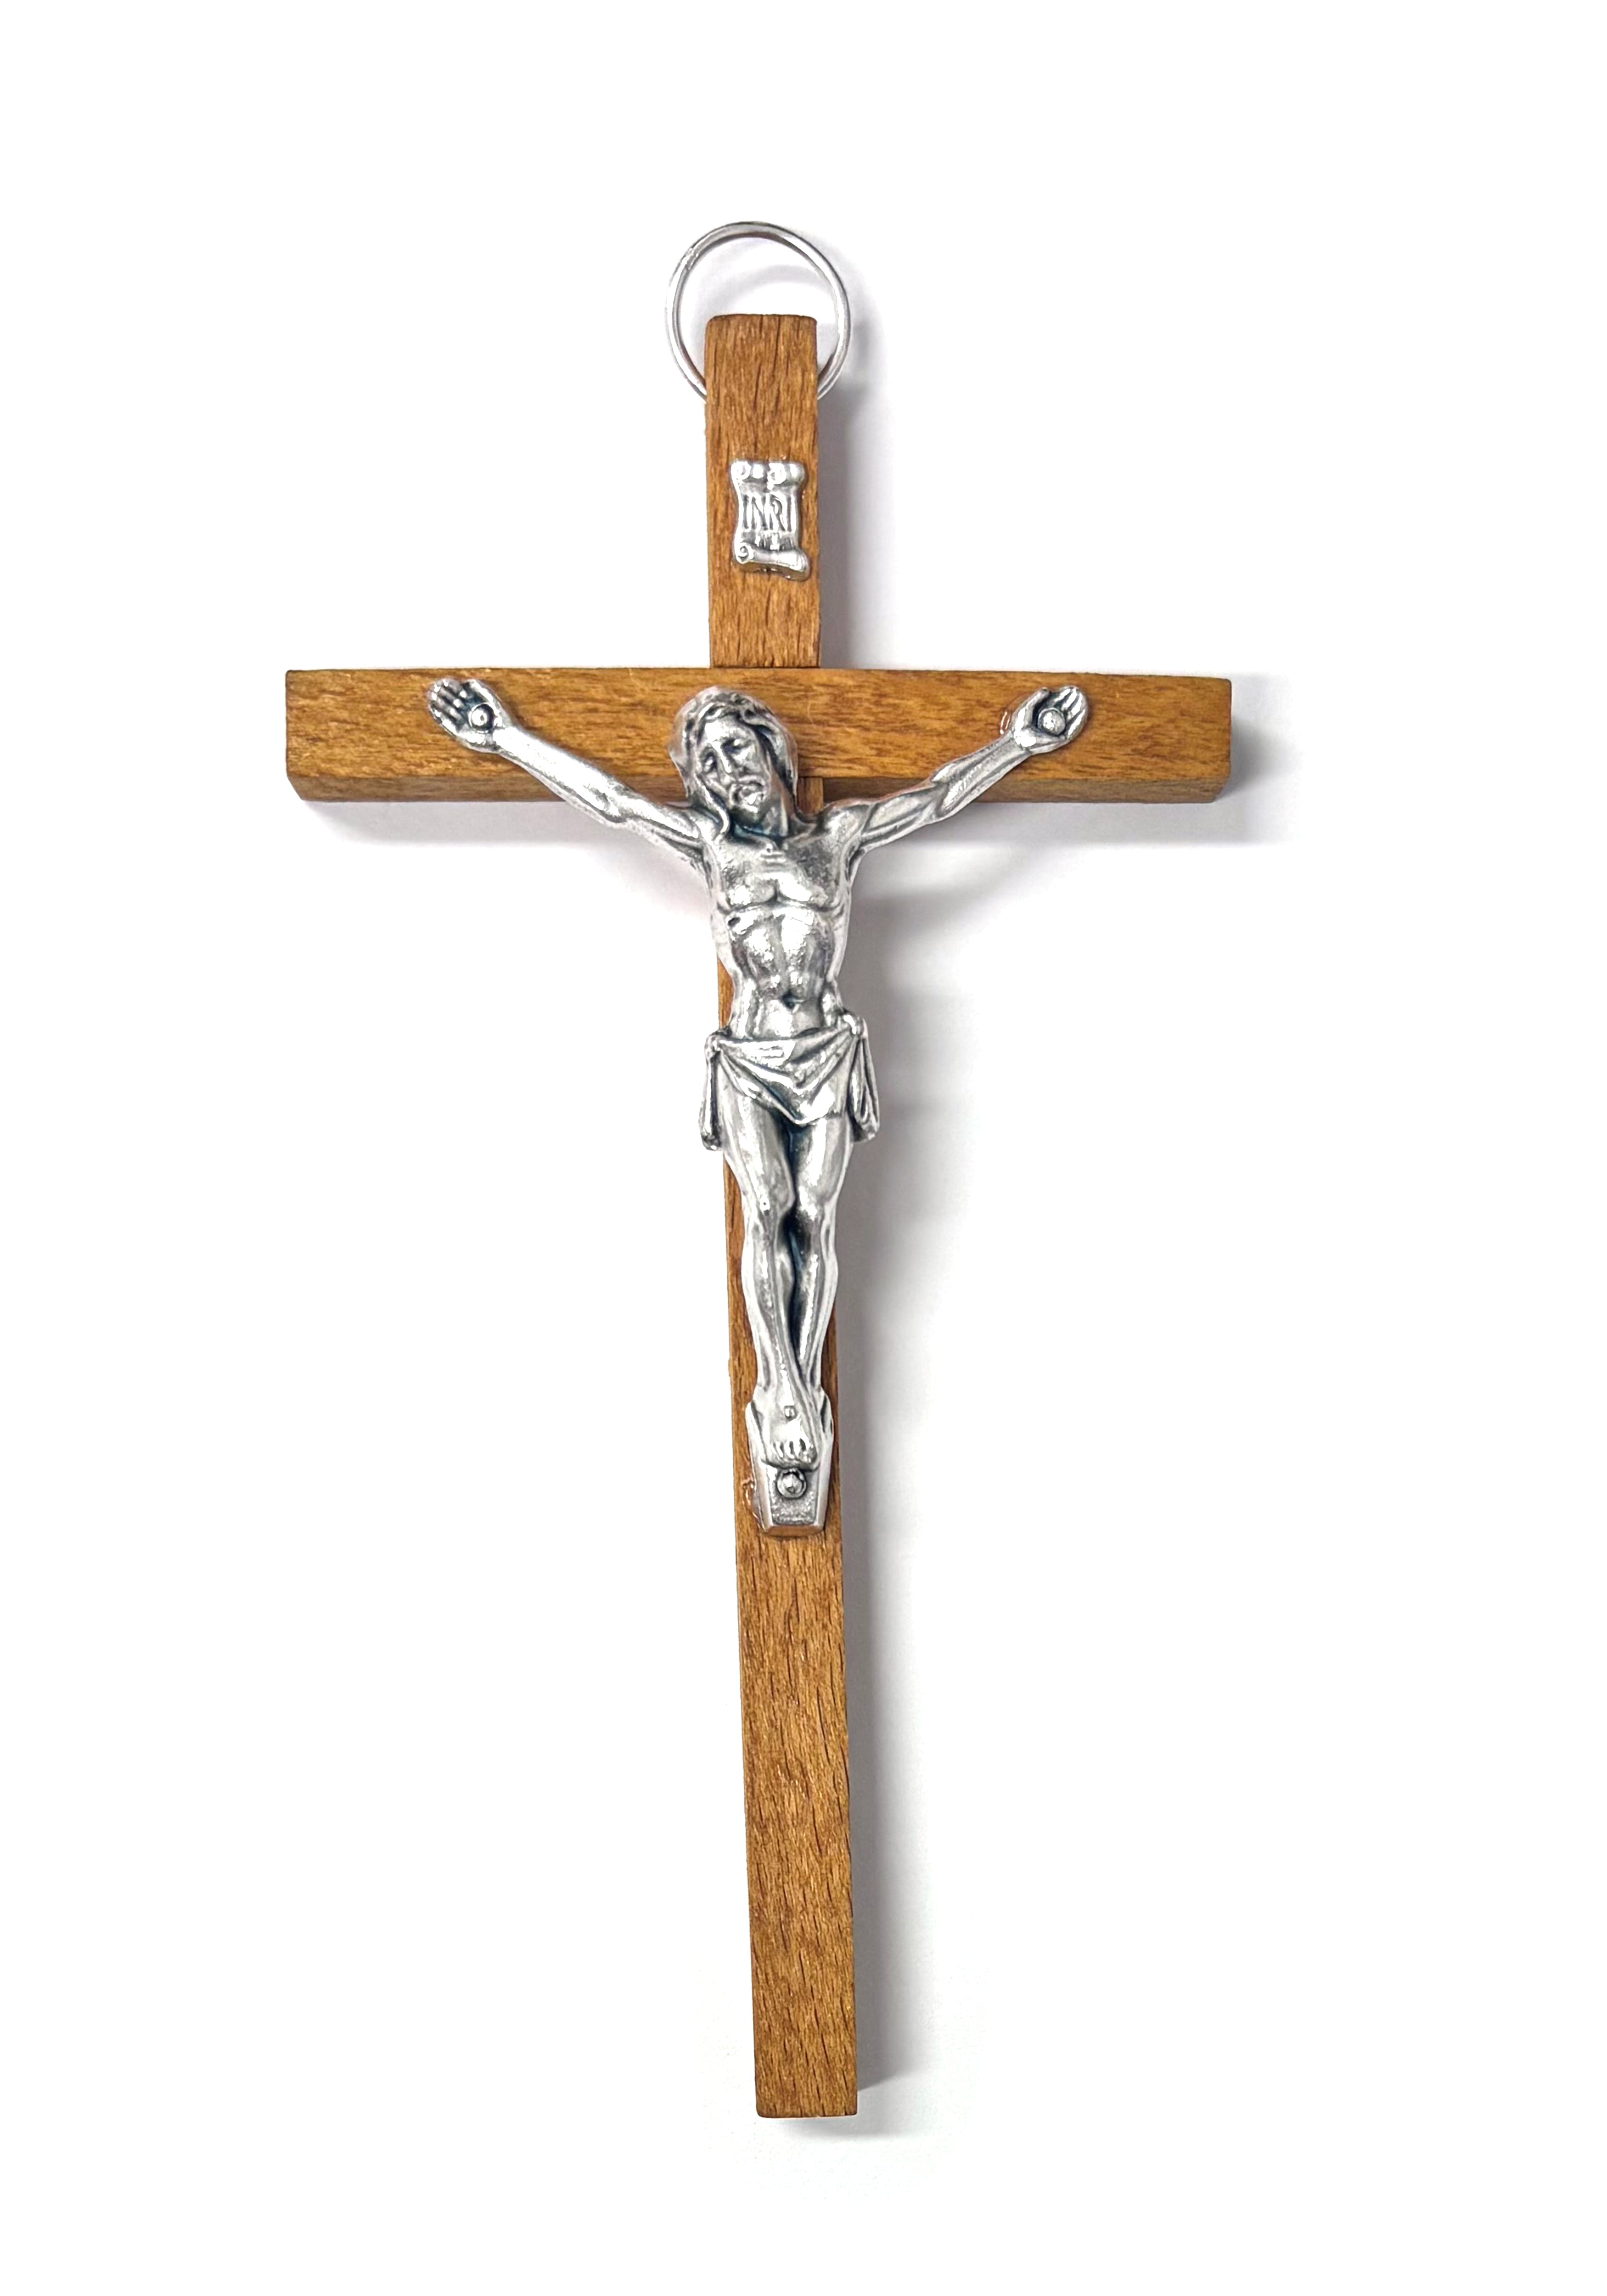 Rustic wood Crucifix